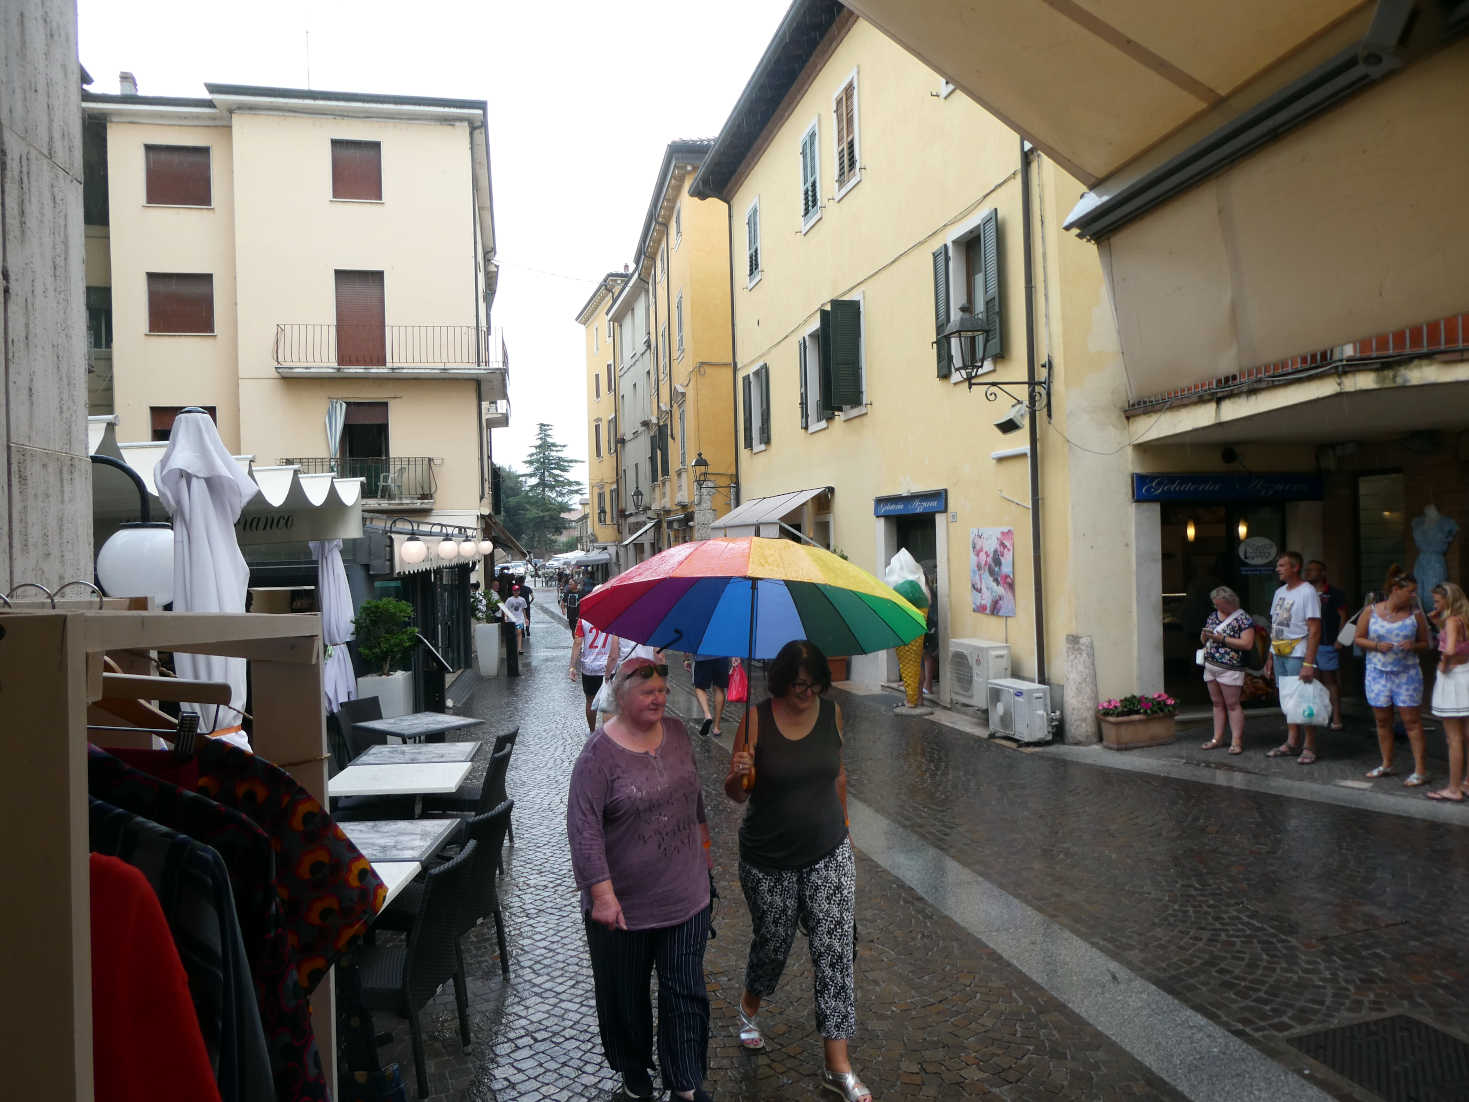 It can rain in Peschiera